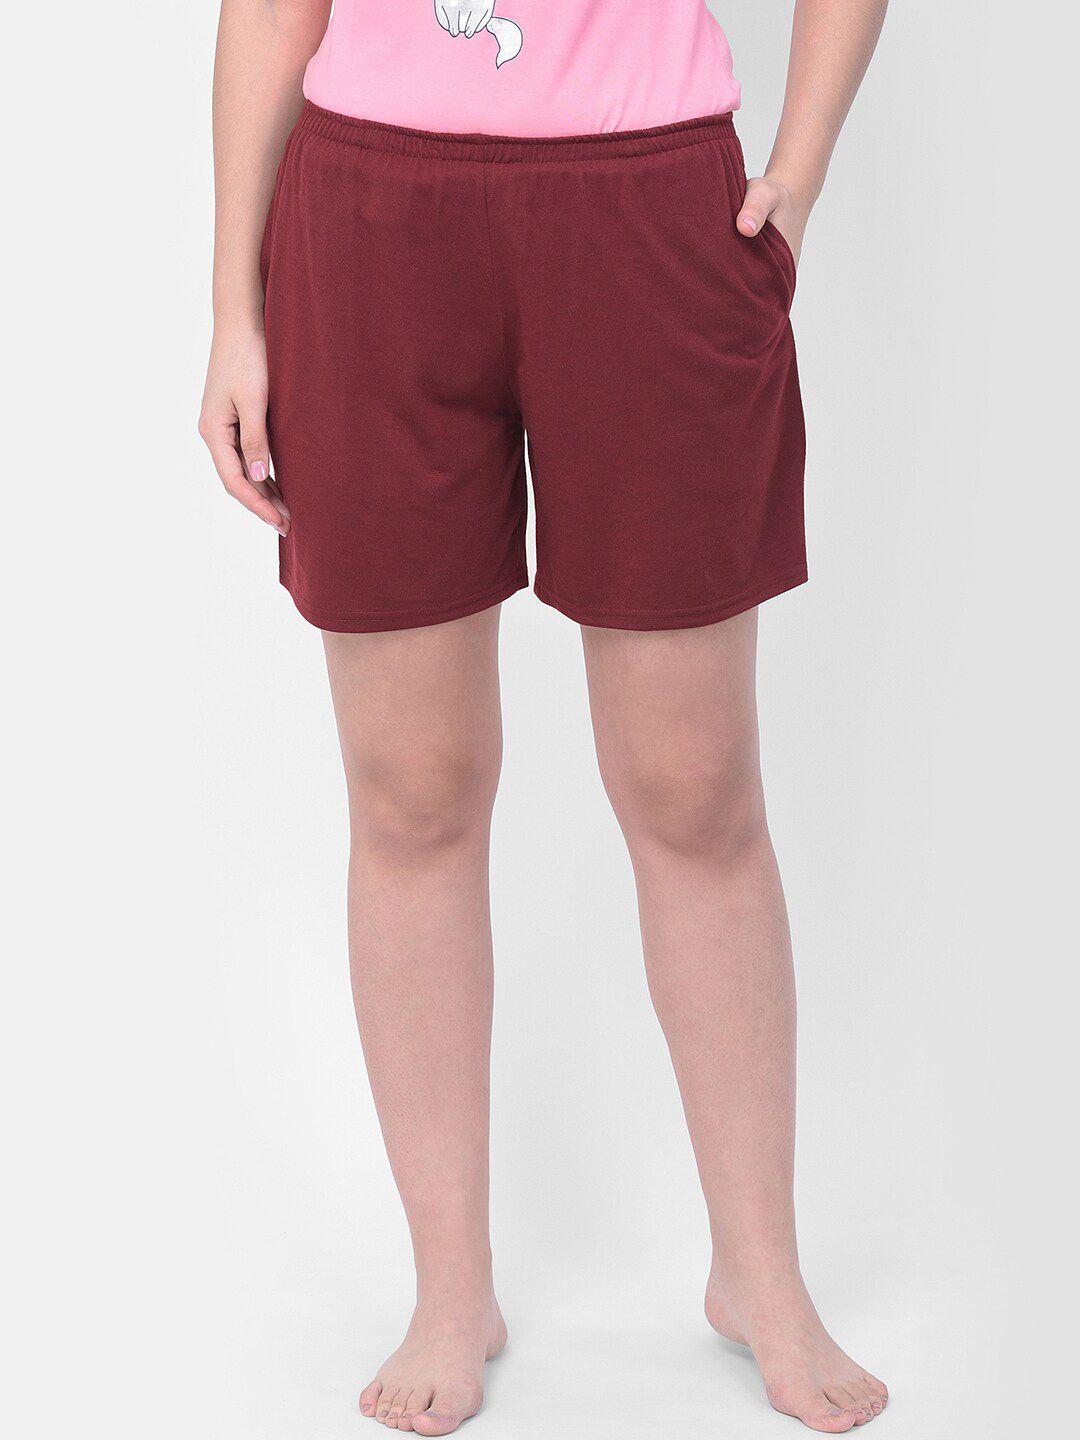 clovia women maroon solid lounge shorts